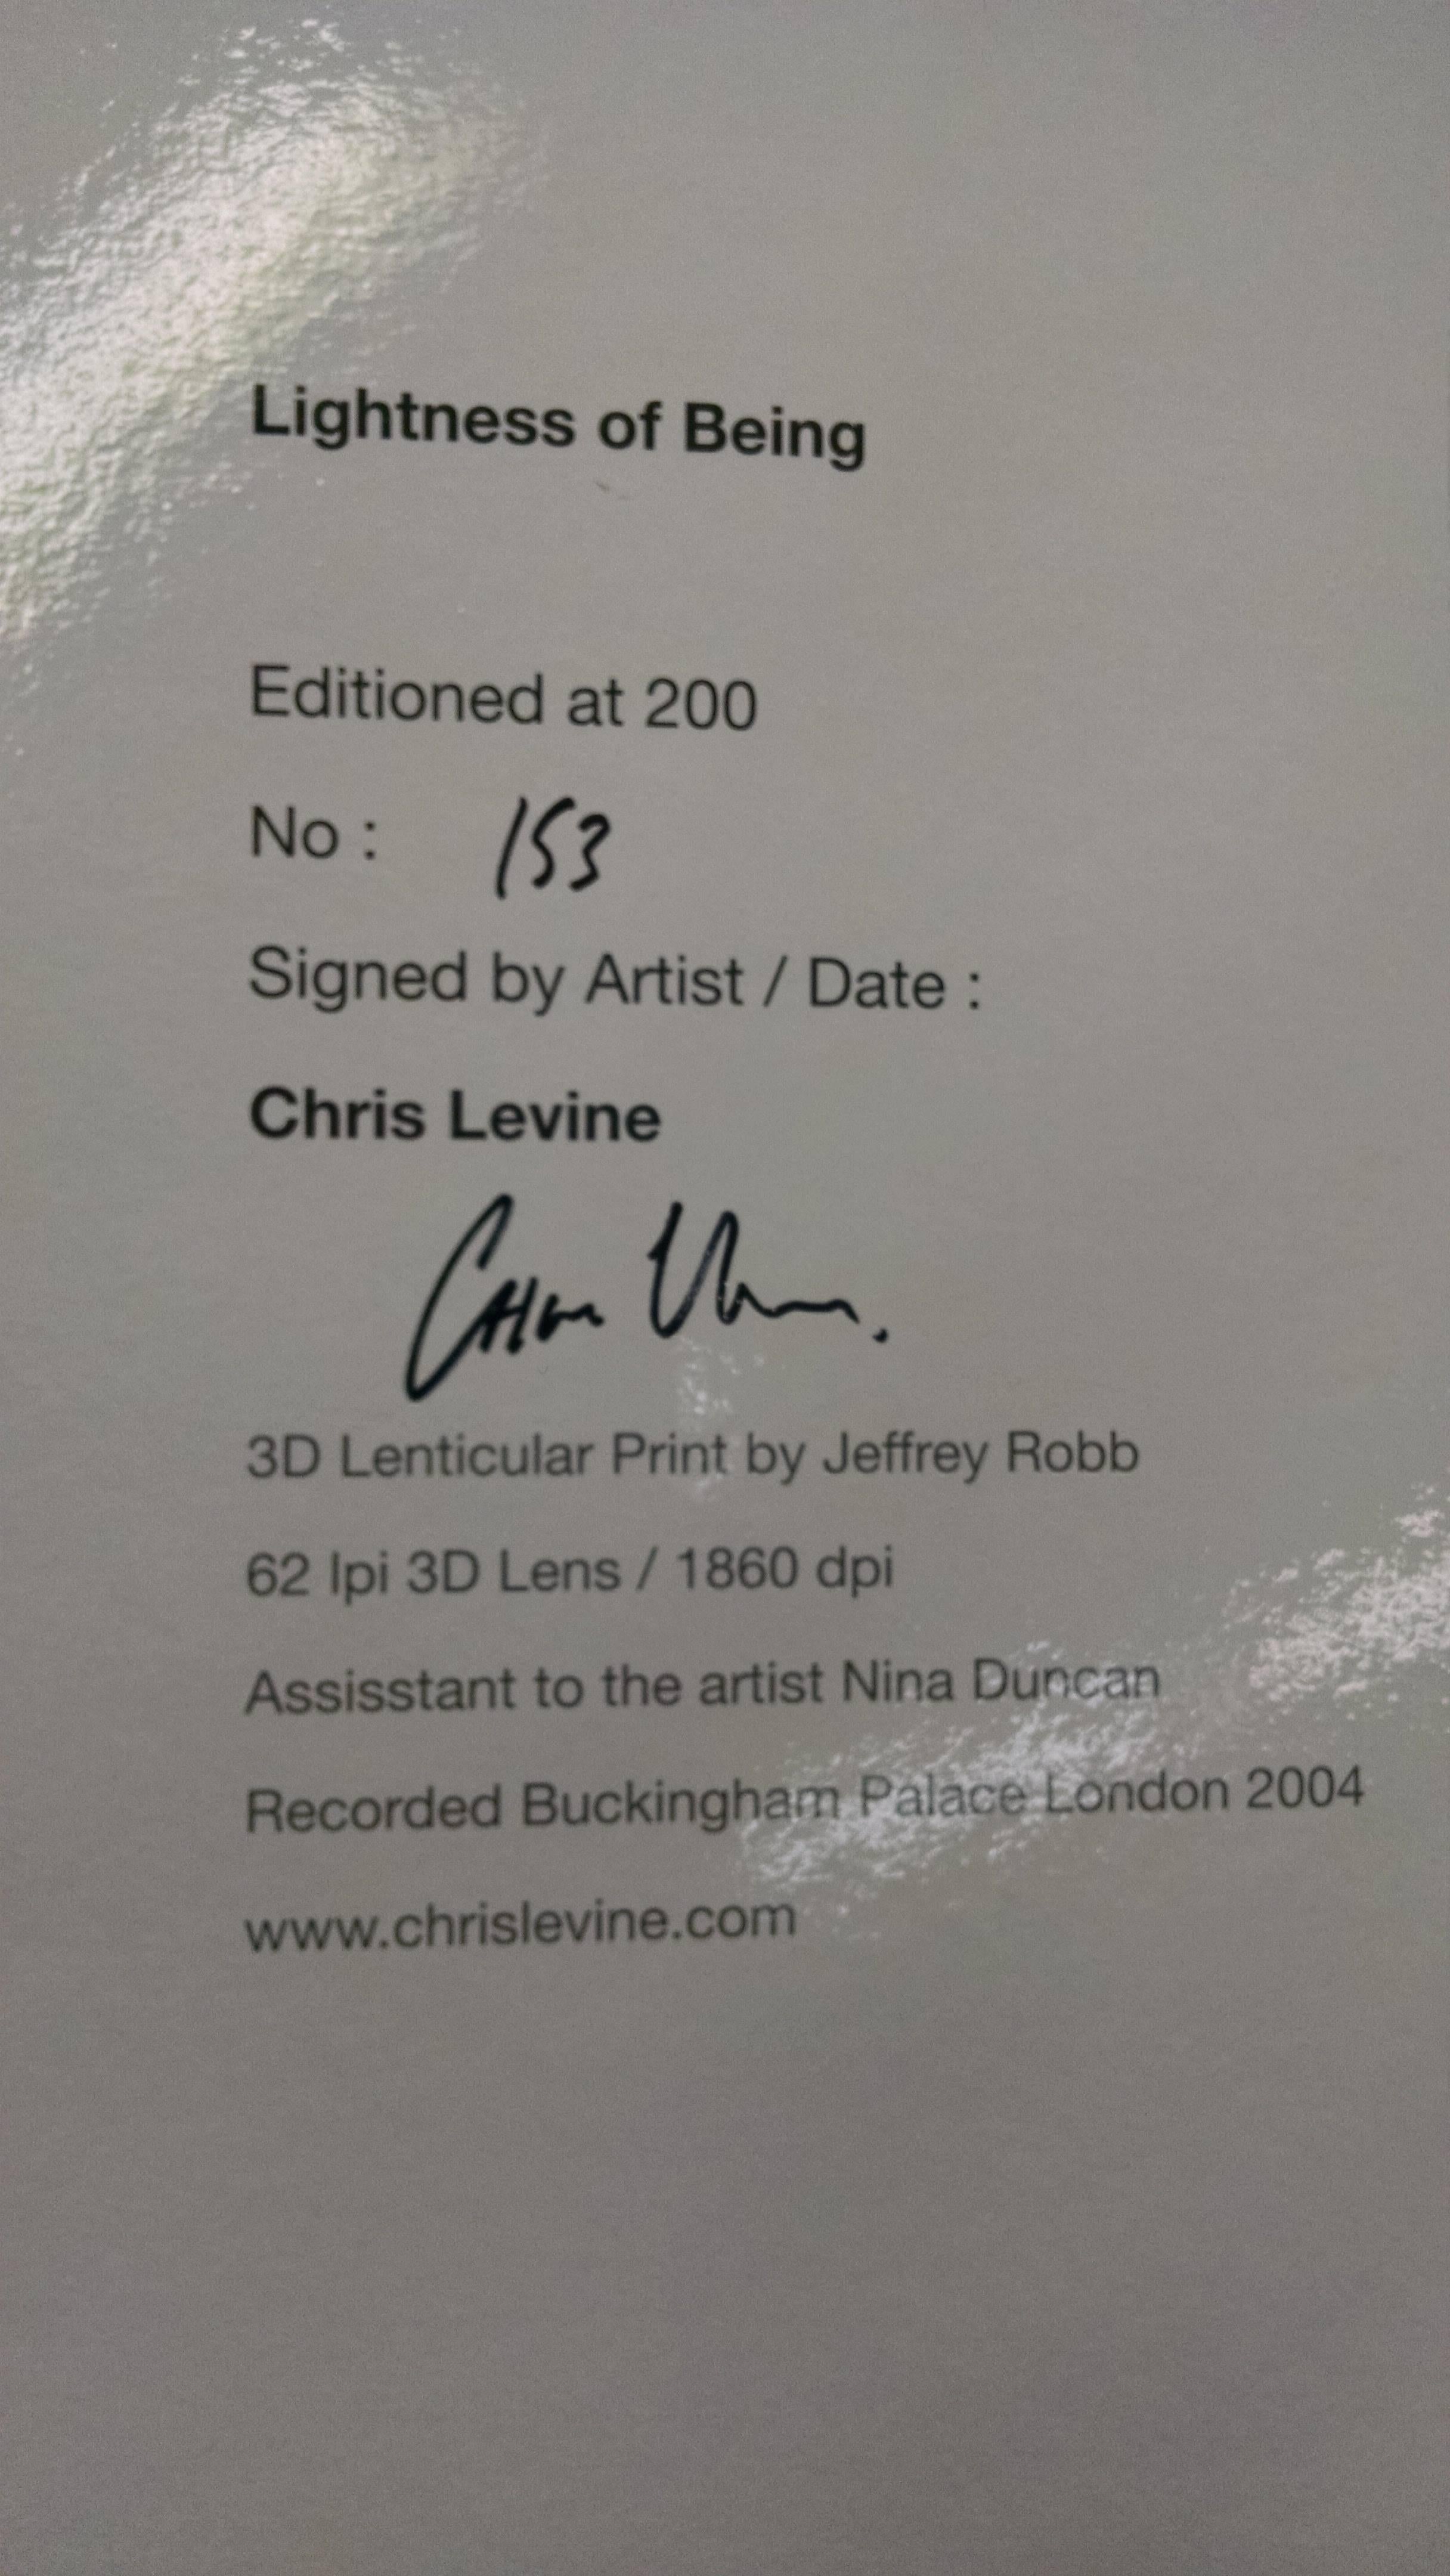 Chris Levine, 